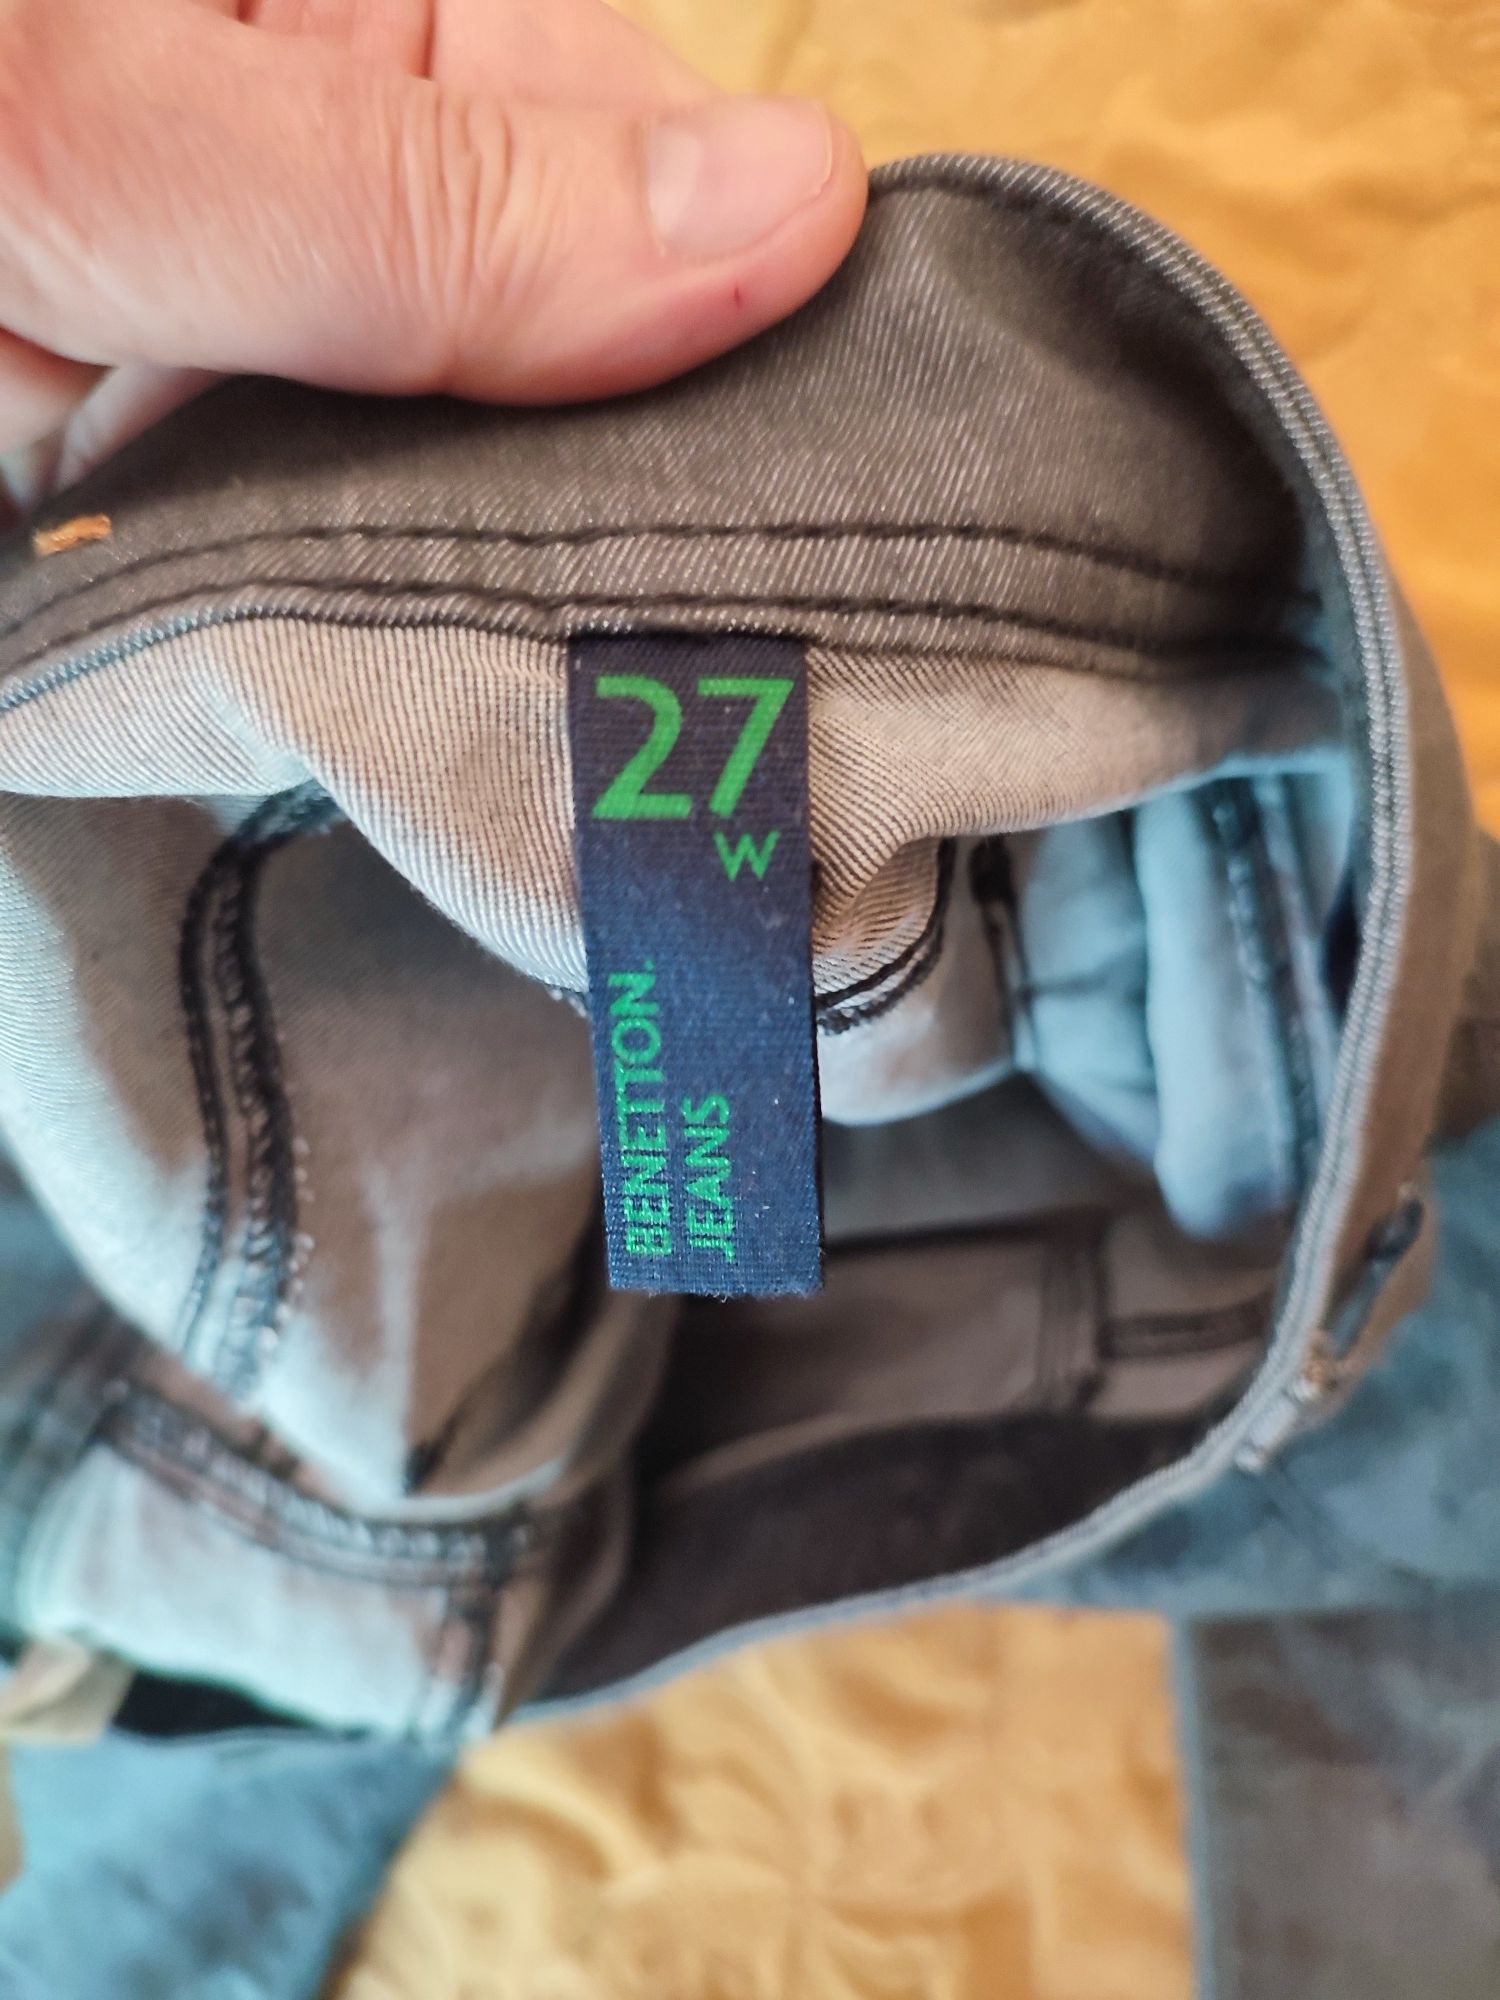 Benetton джинсы,брюки,27 размер,S, оригинал